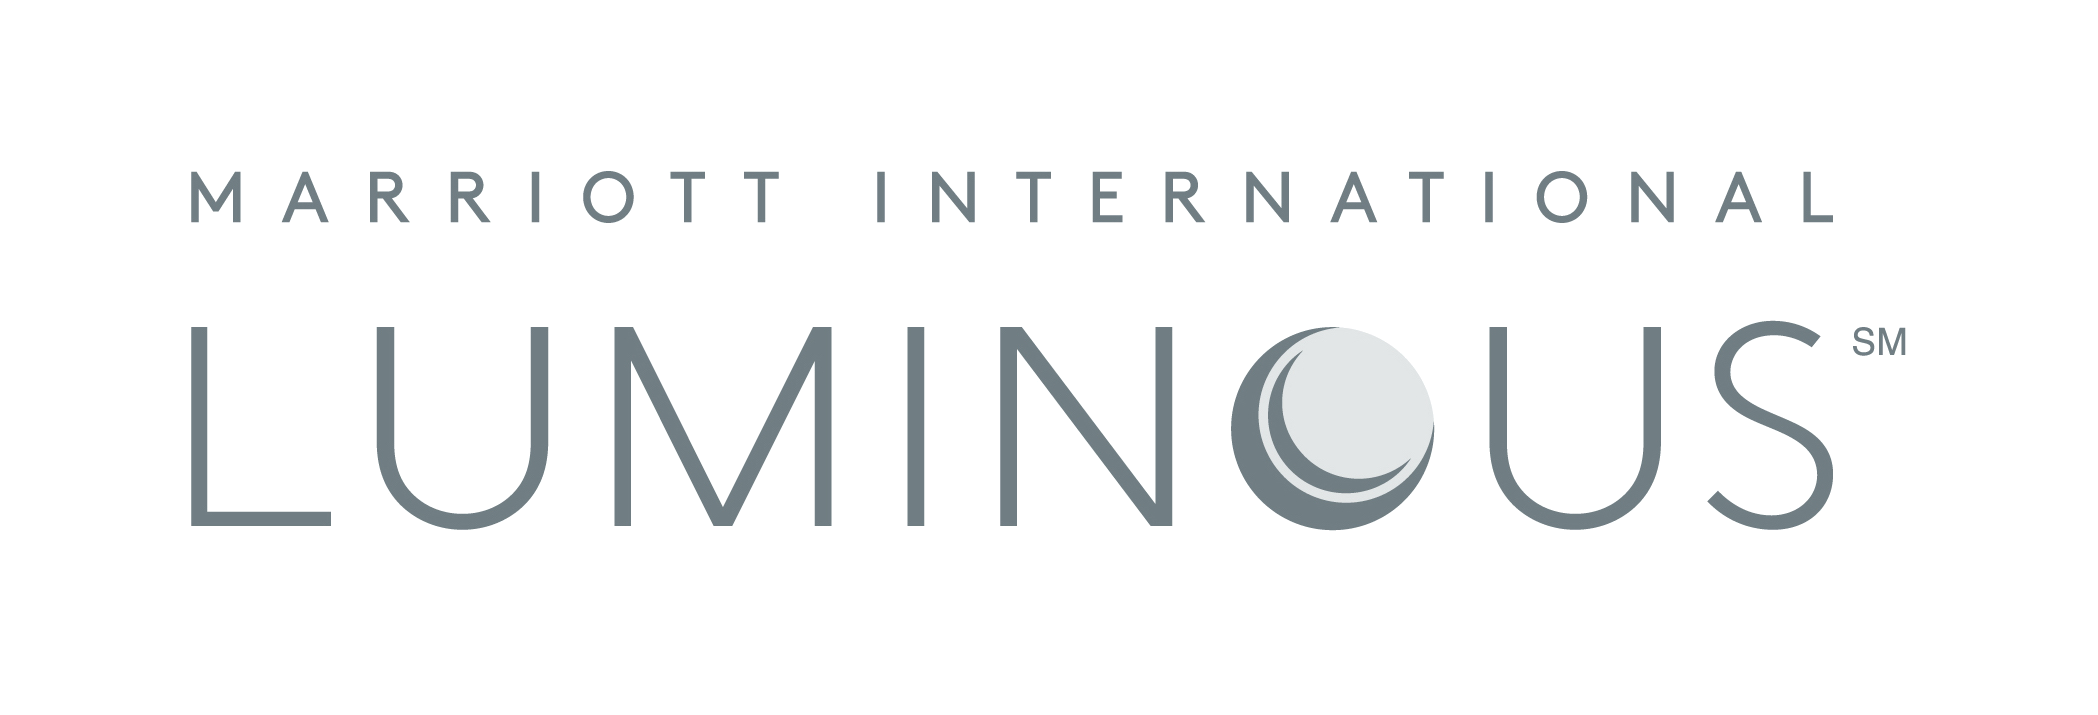 5d2a1d96e06f4c354c9bcbab_Marriott International Luminous logo.png